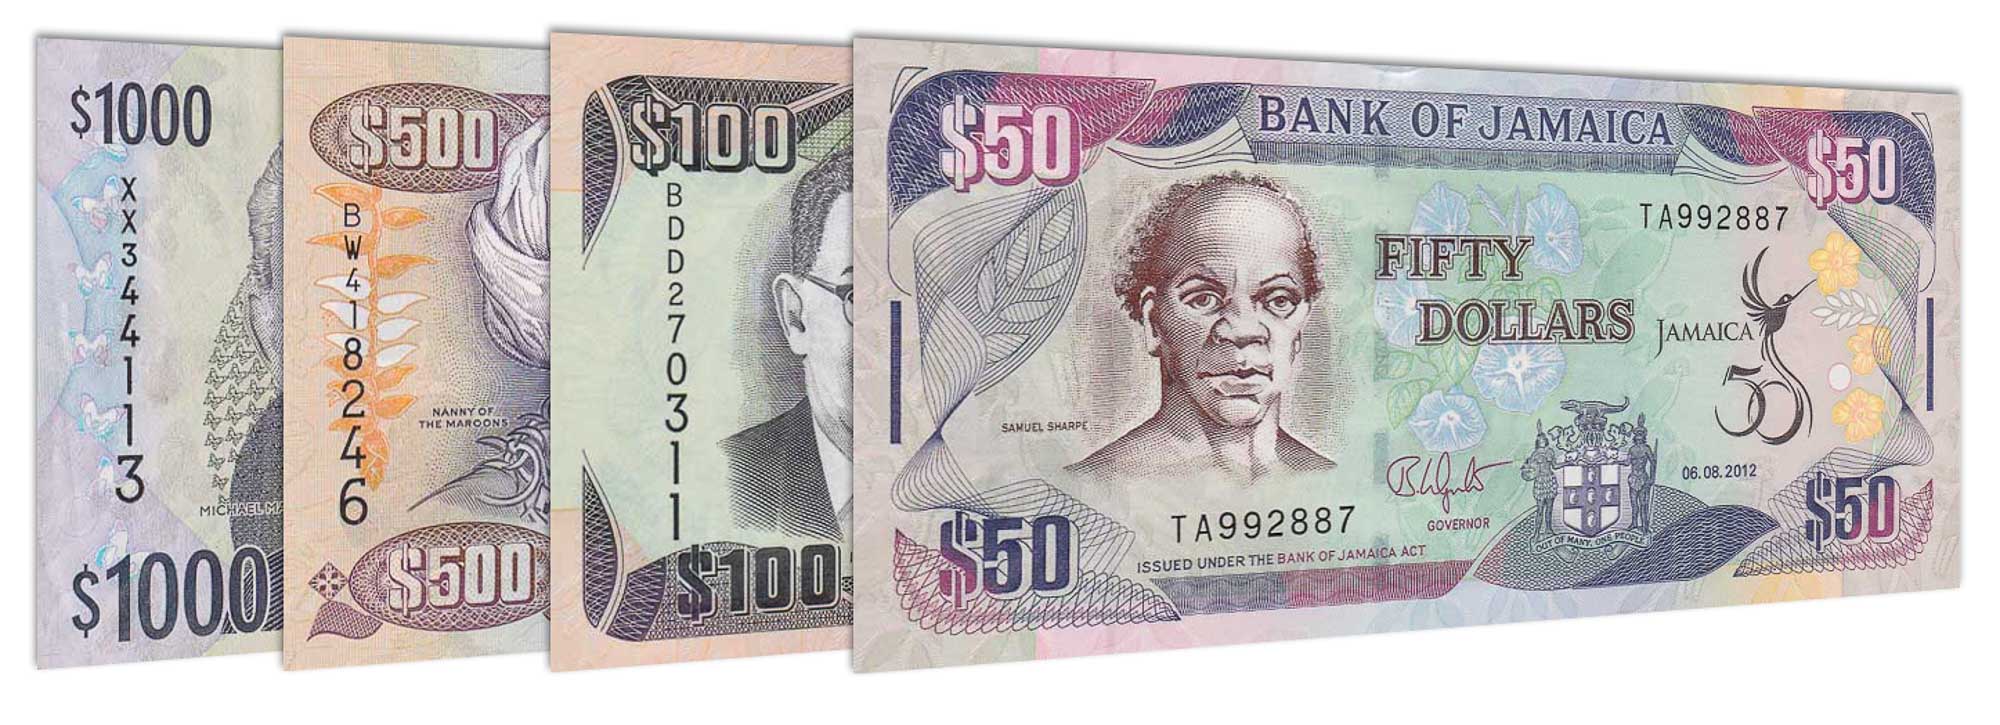 50000 jamaican dollars to us